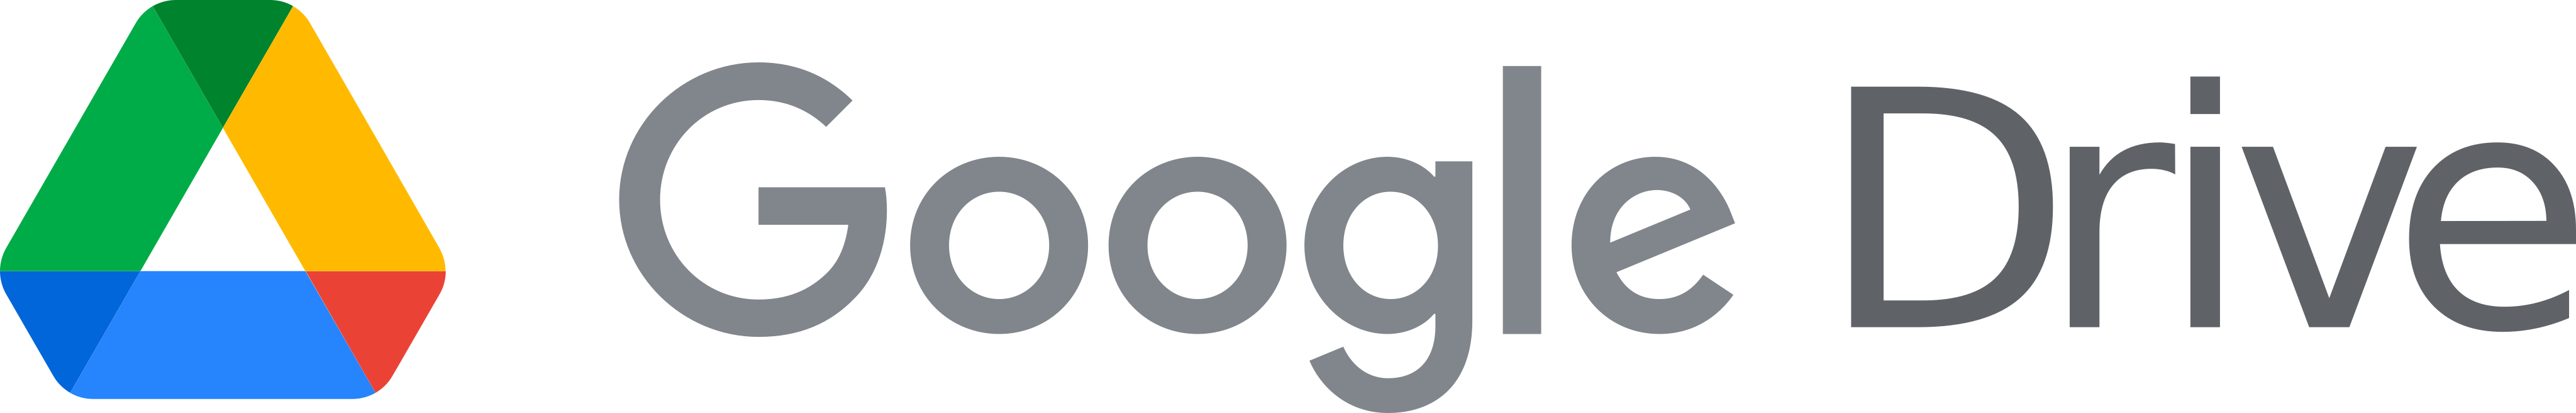 Google Drive Logo PNG Clipart